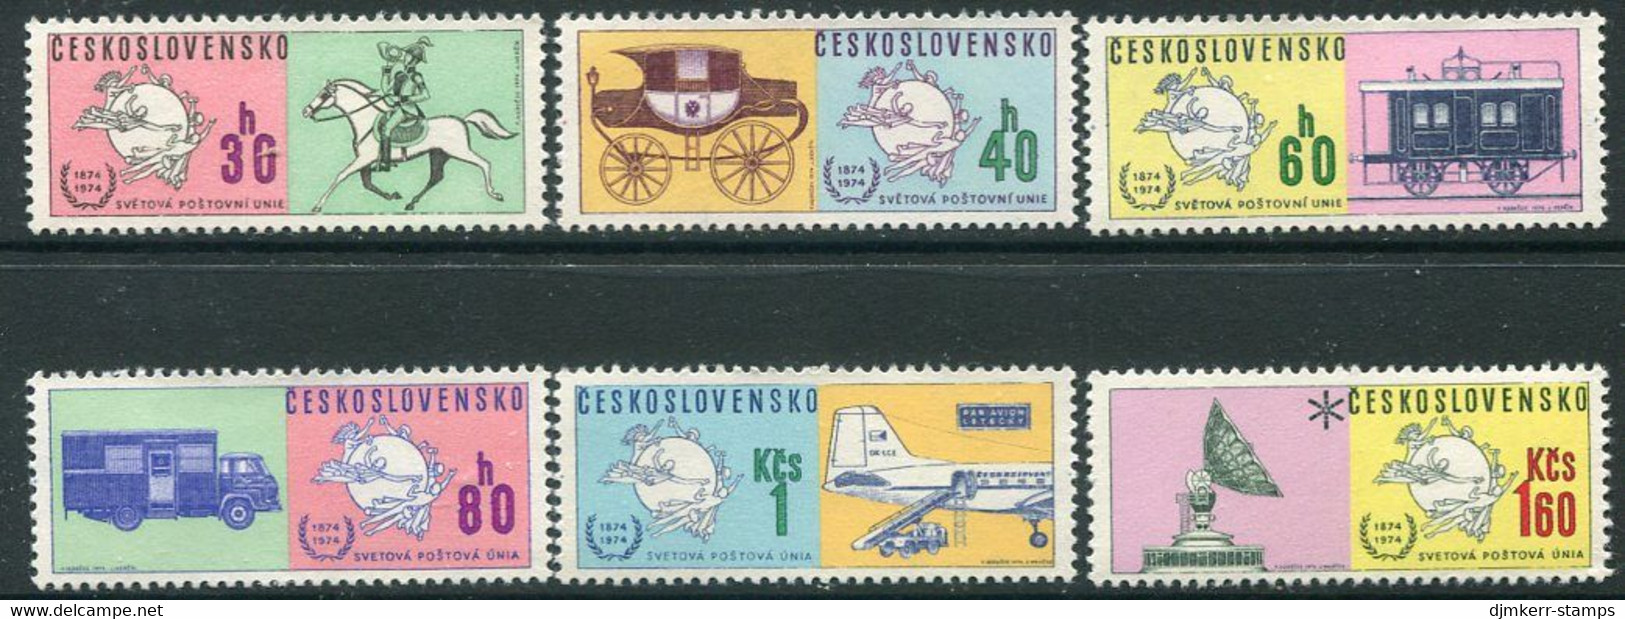 CZECHOSLOVAKIA 1974 Universal Postal Union MNH / **  Michel 2222-27 - Ungebraucht